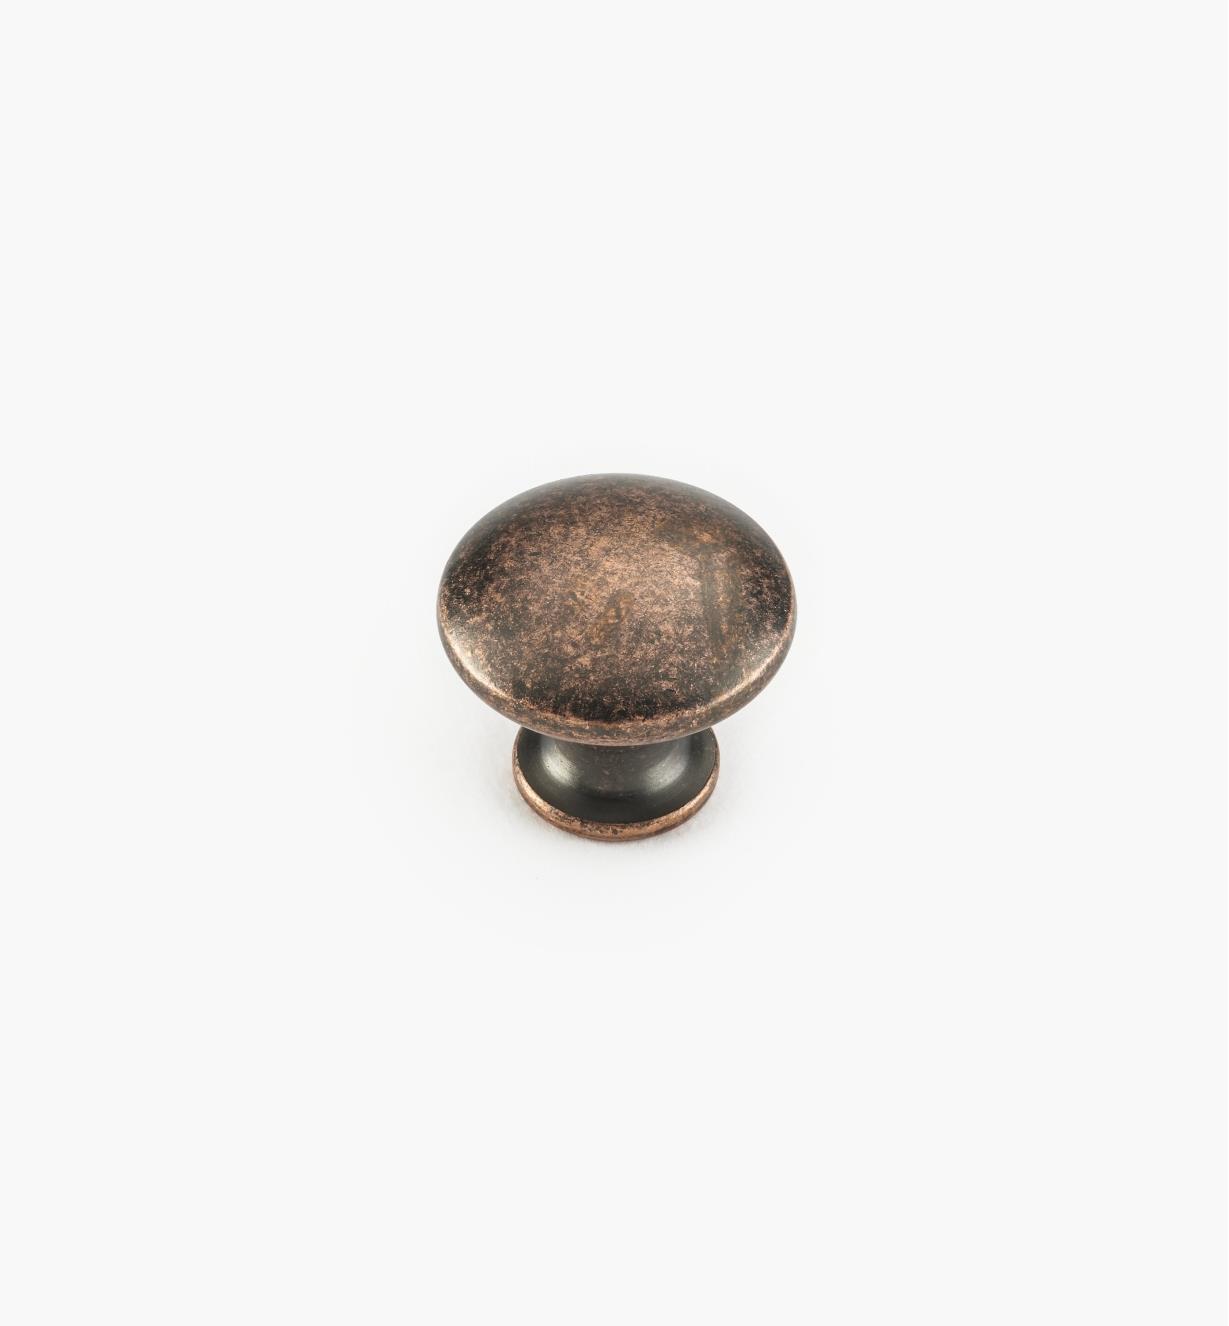 02W4223 - 3/4" x 5/8" Antique Copper Knob